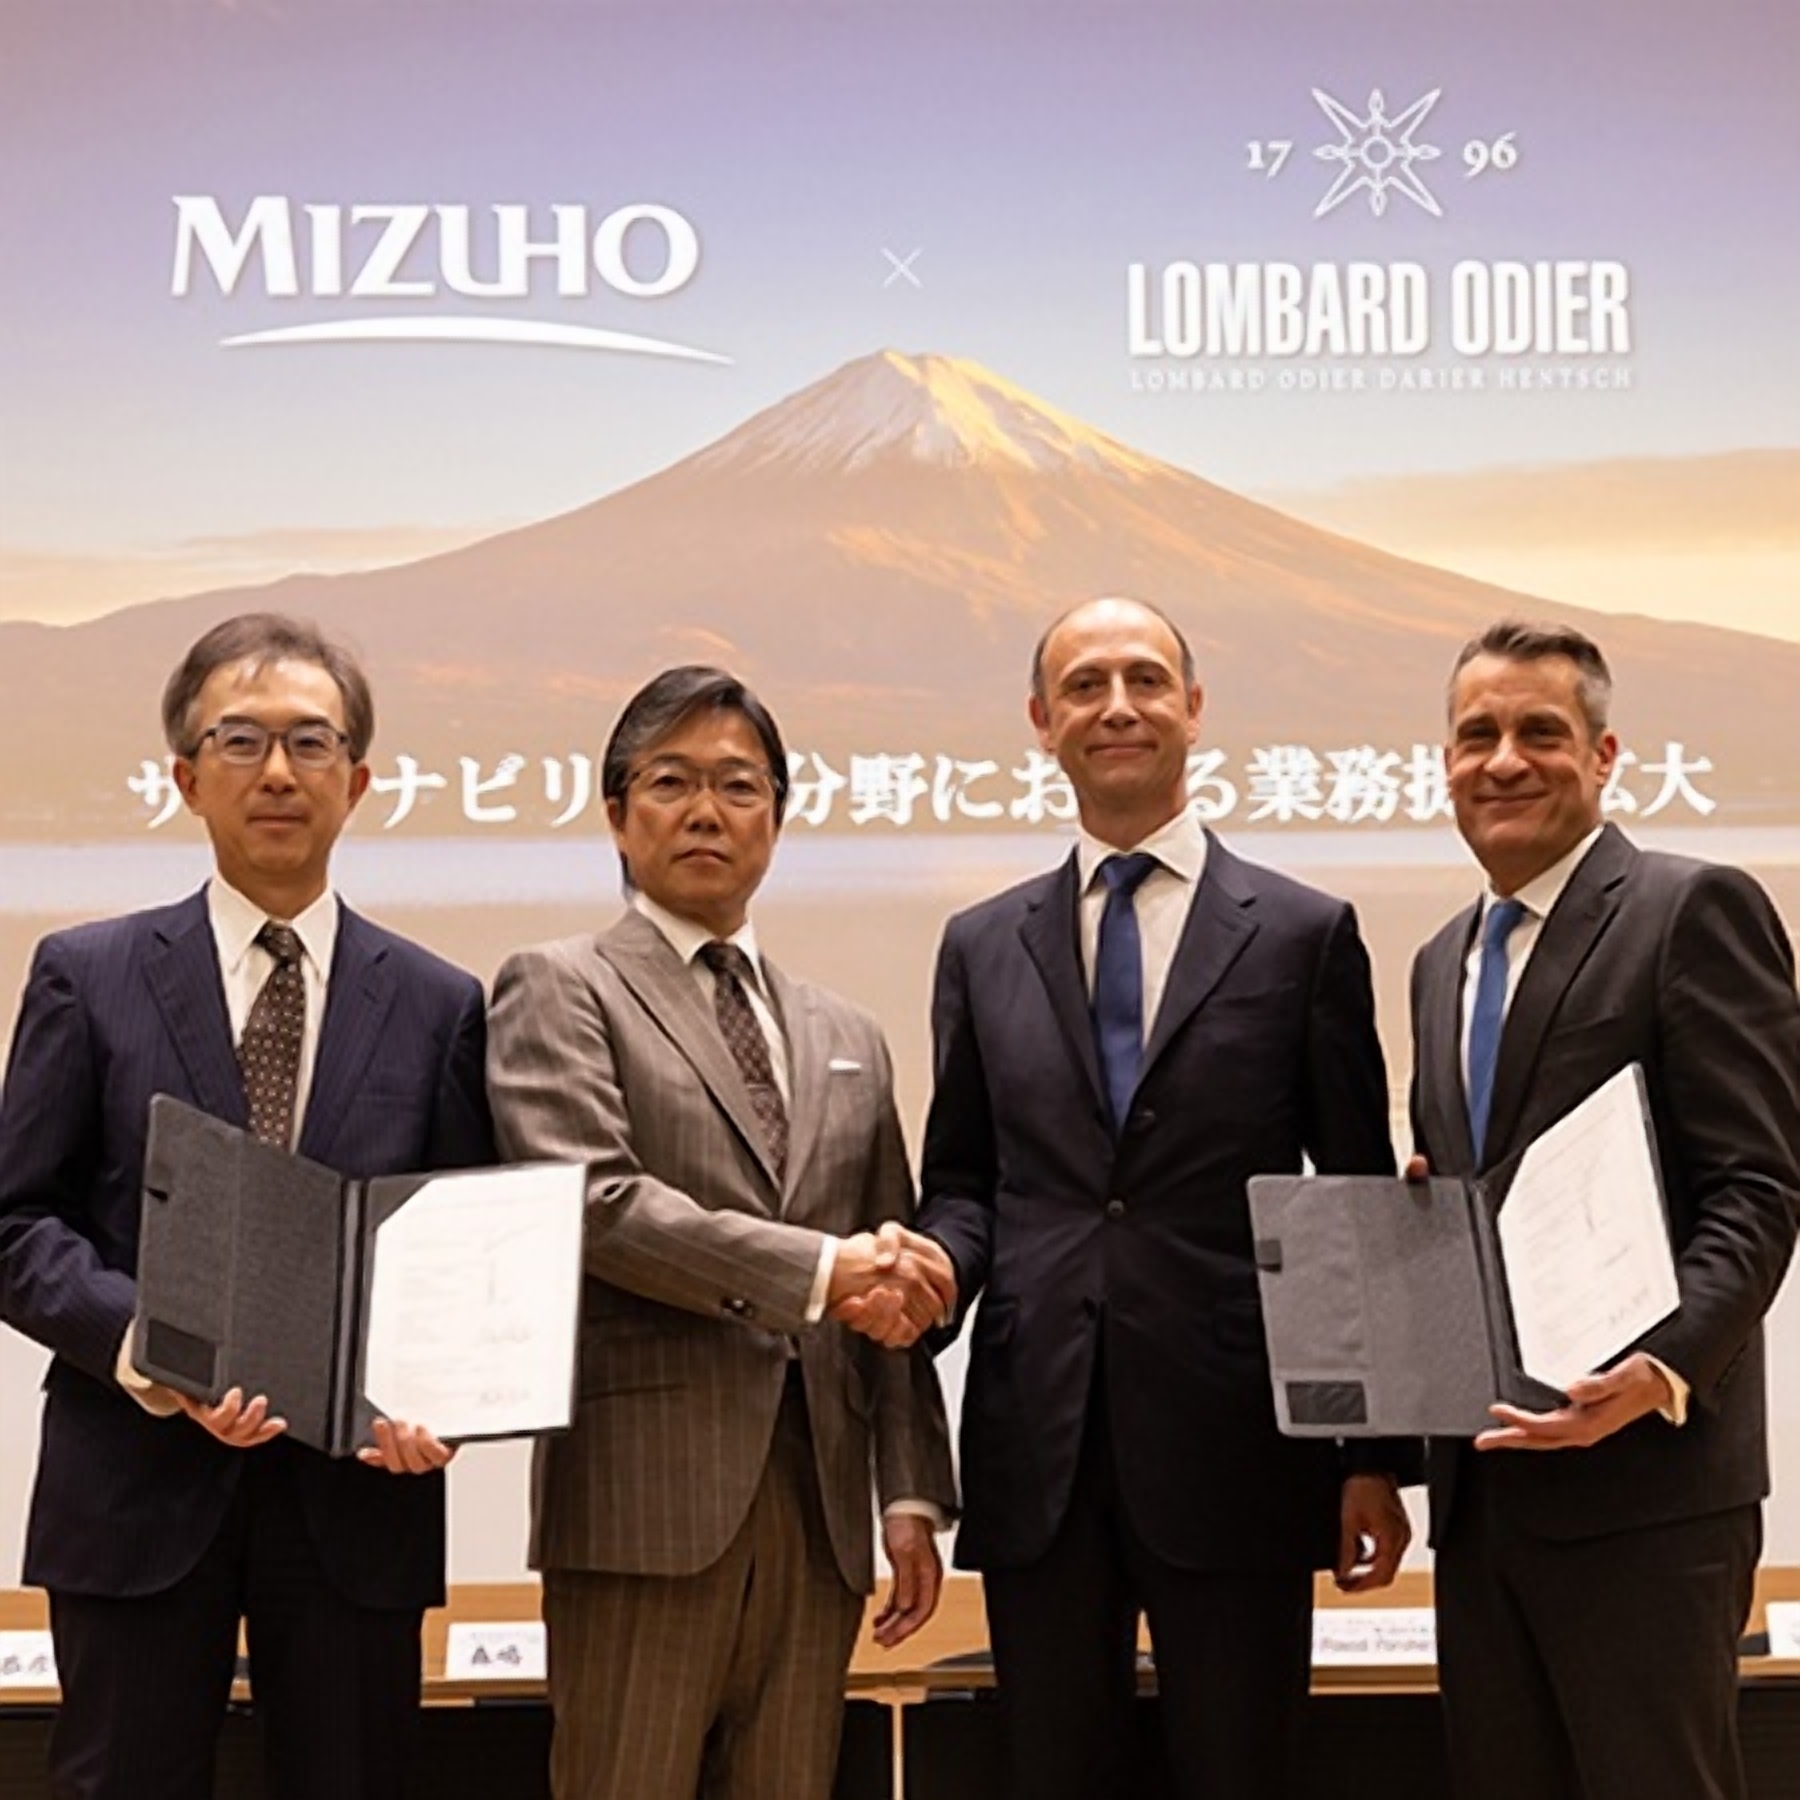 Mizuho, Lombard Odier Partner on Sustainable Finance